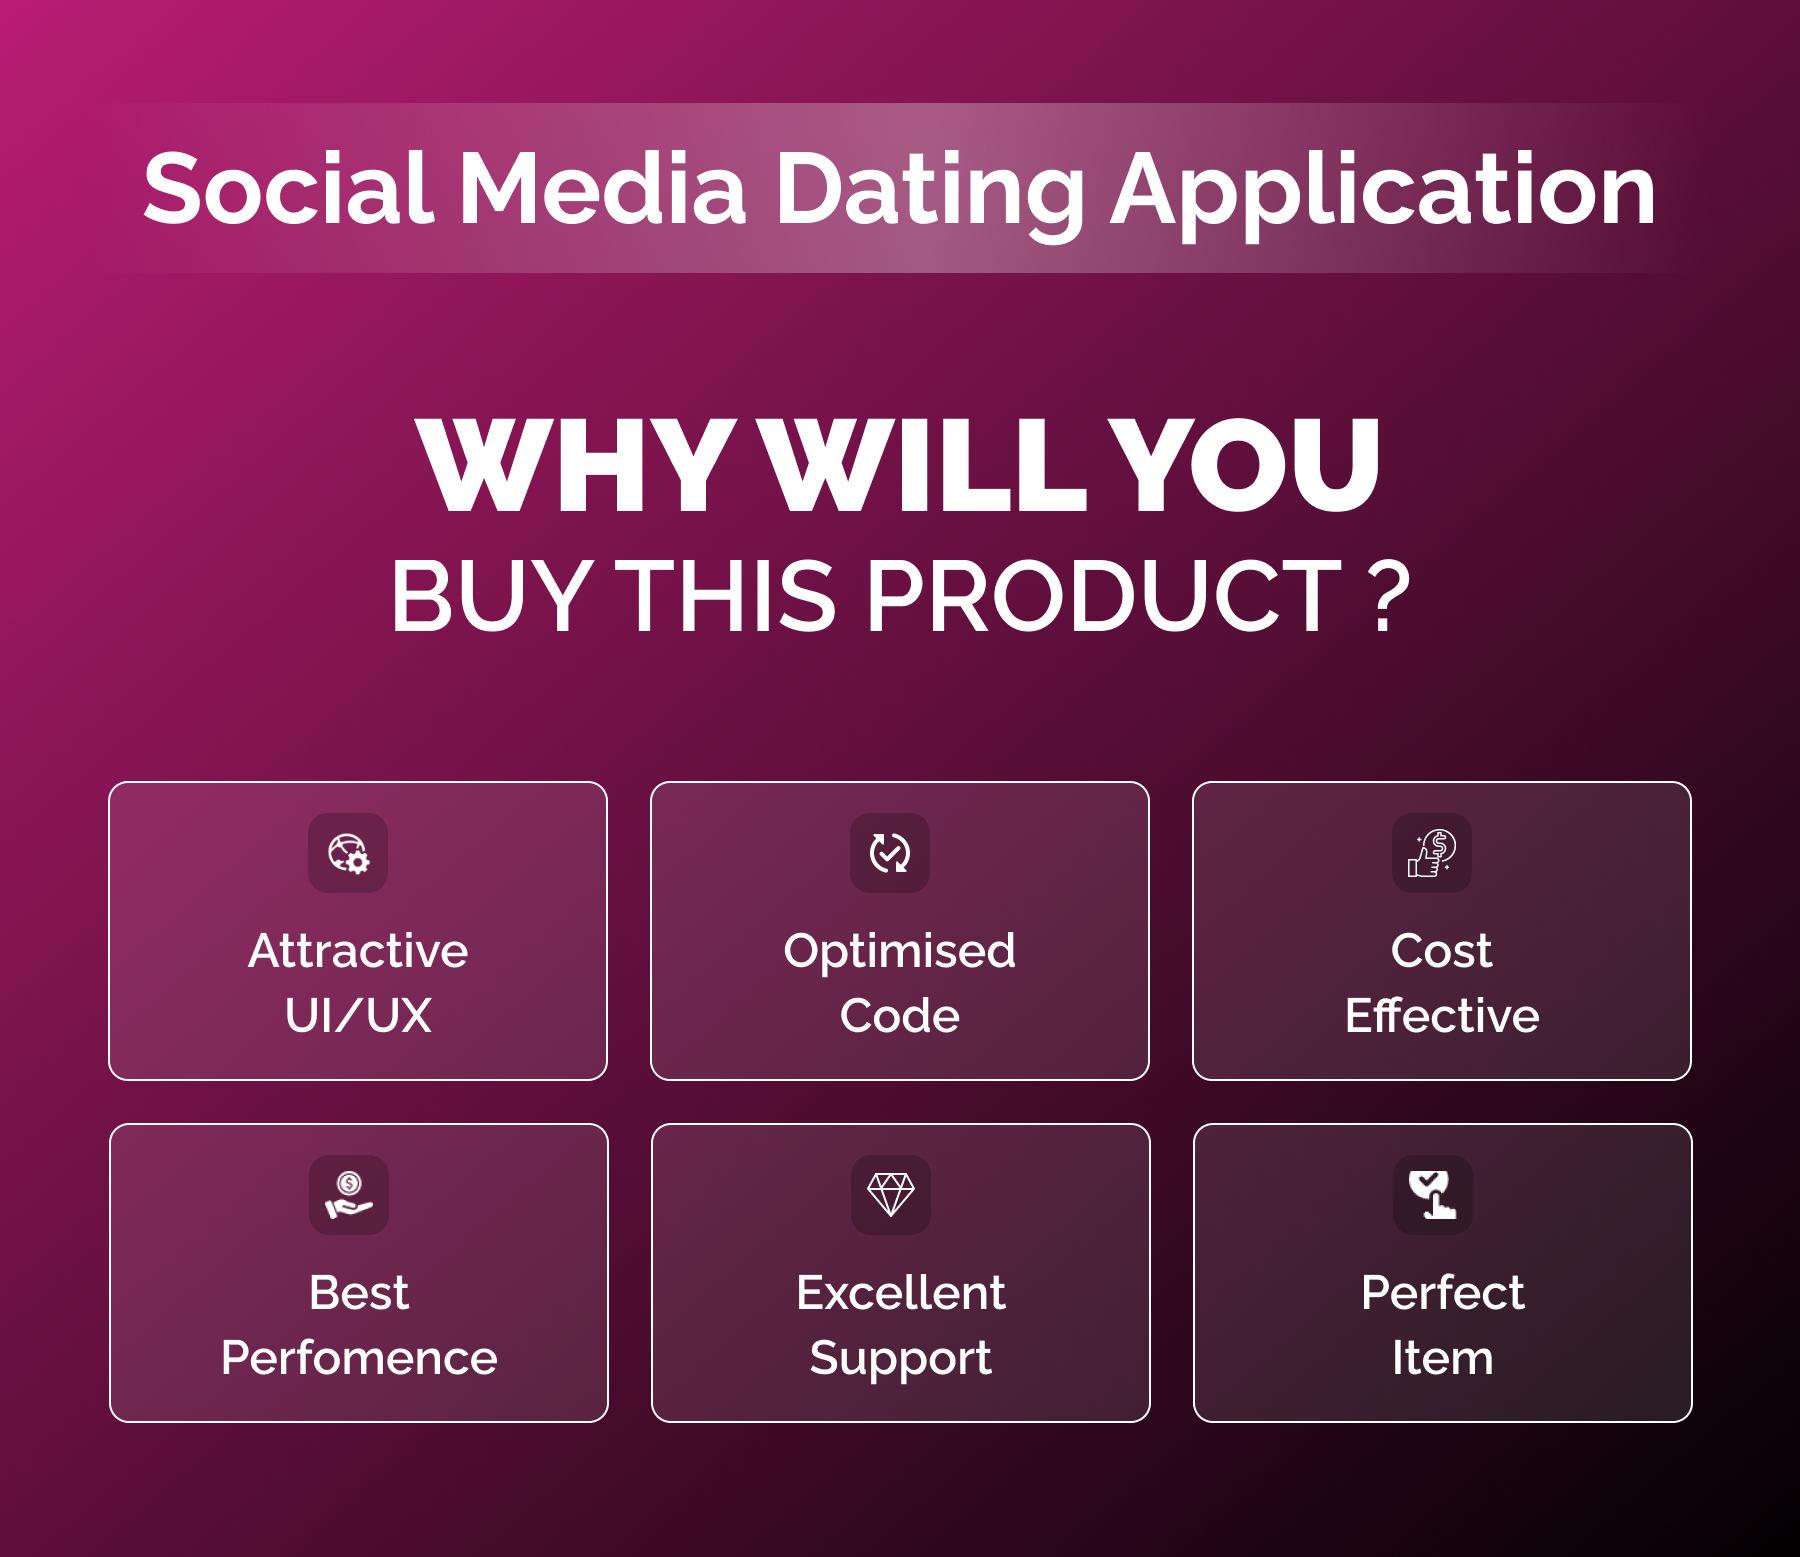 DatingU Dating App - iOS Swift Full Application With Admin Panel - 2